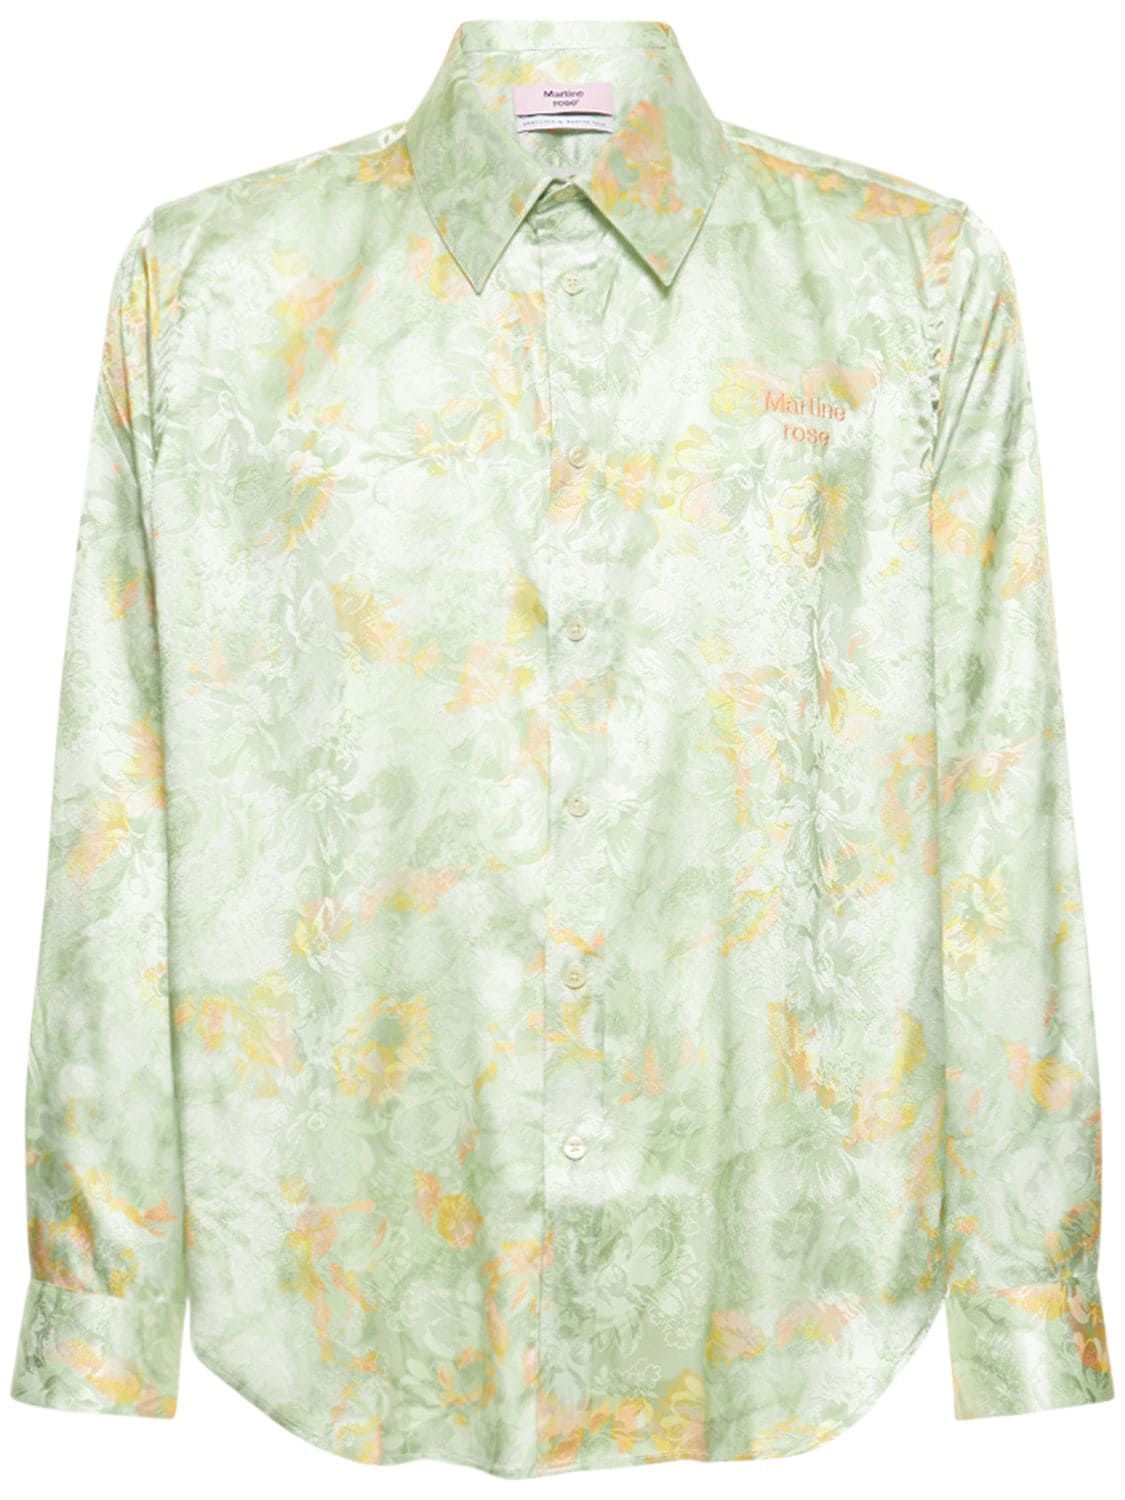 MARTINE ROSE Floral Print Shirt